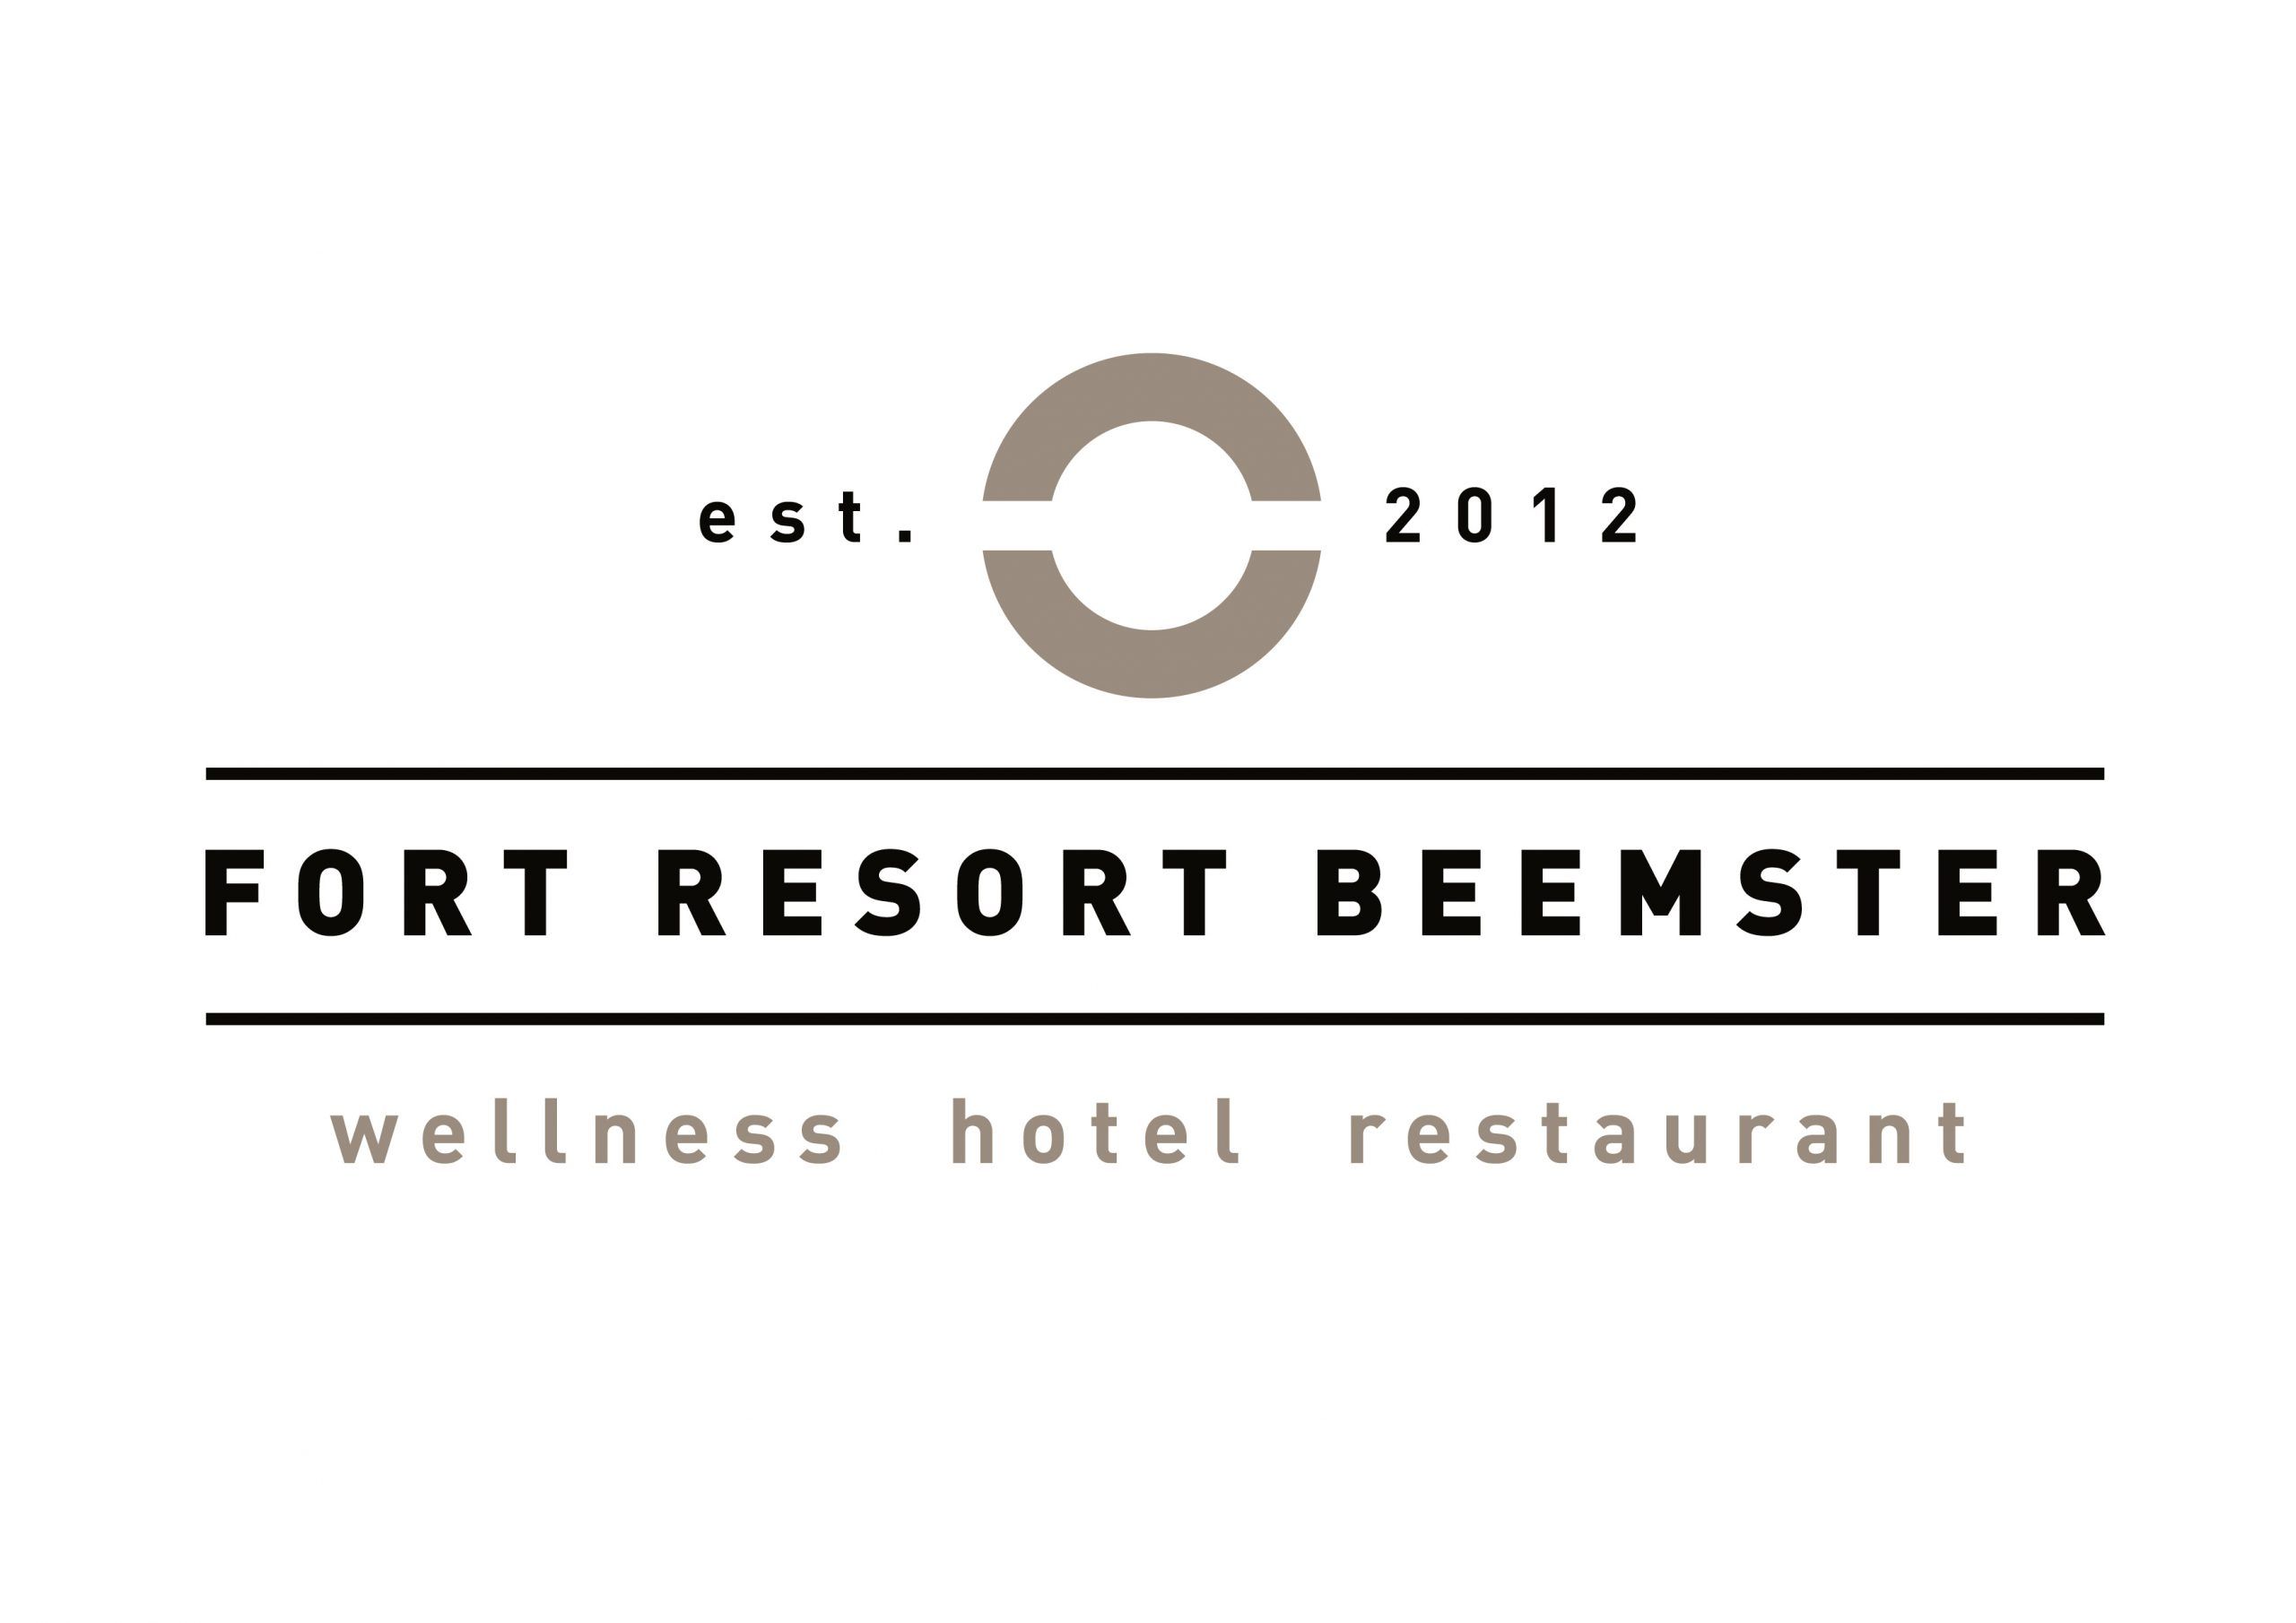 Fort Resort Beemster